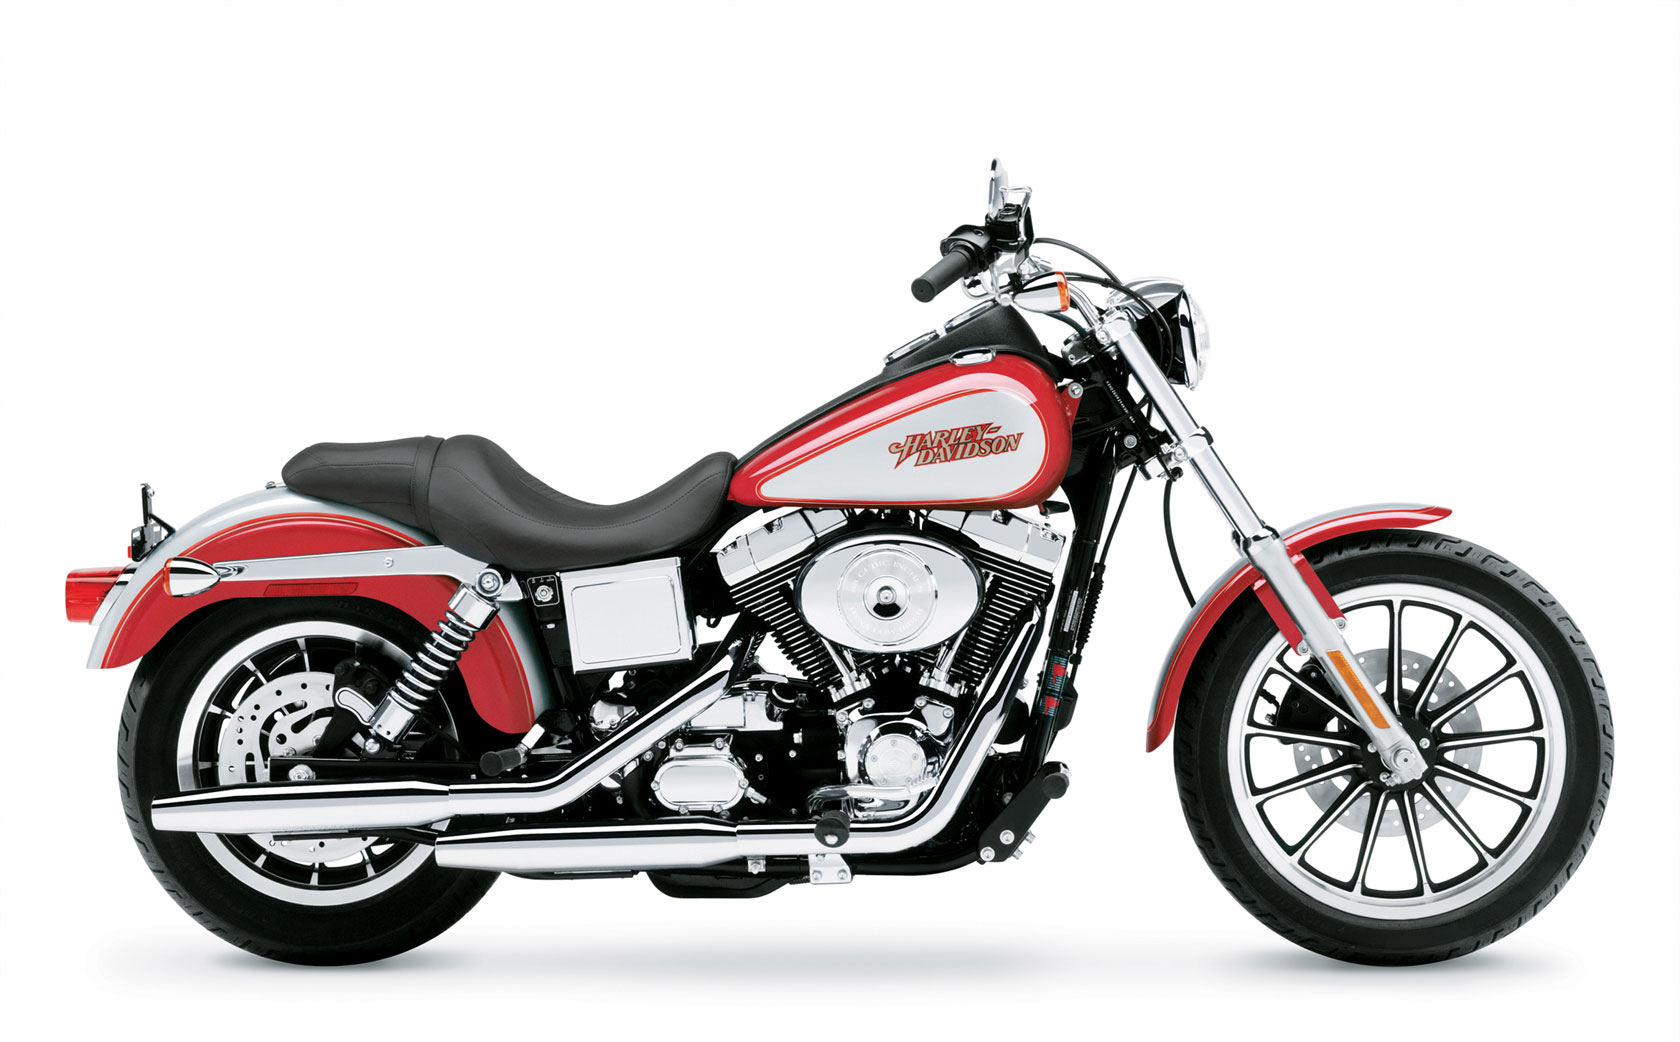 2004 Harley Davidson Fxdl I Dyna Low Rider Wallpaper   1680x1042    